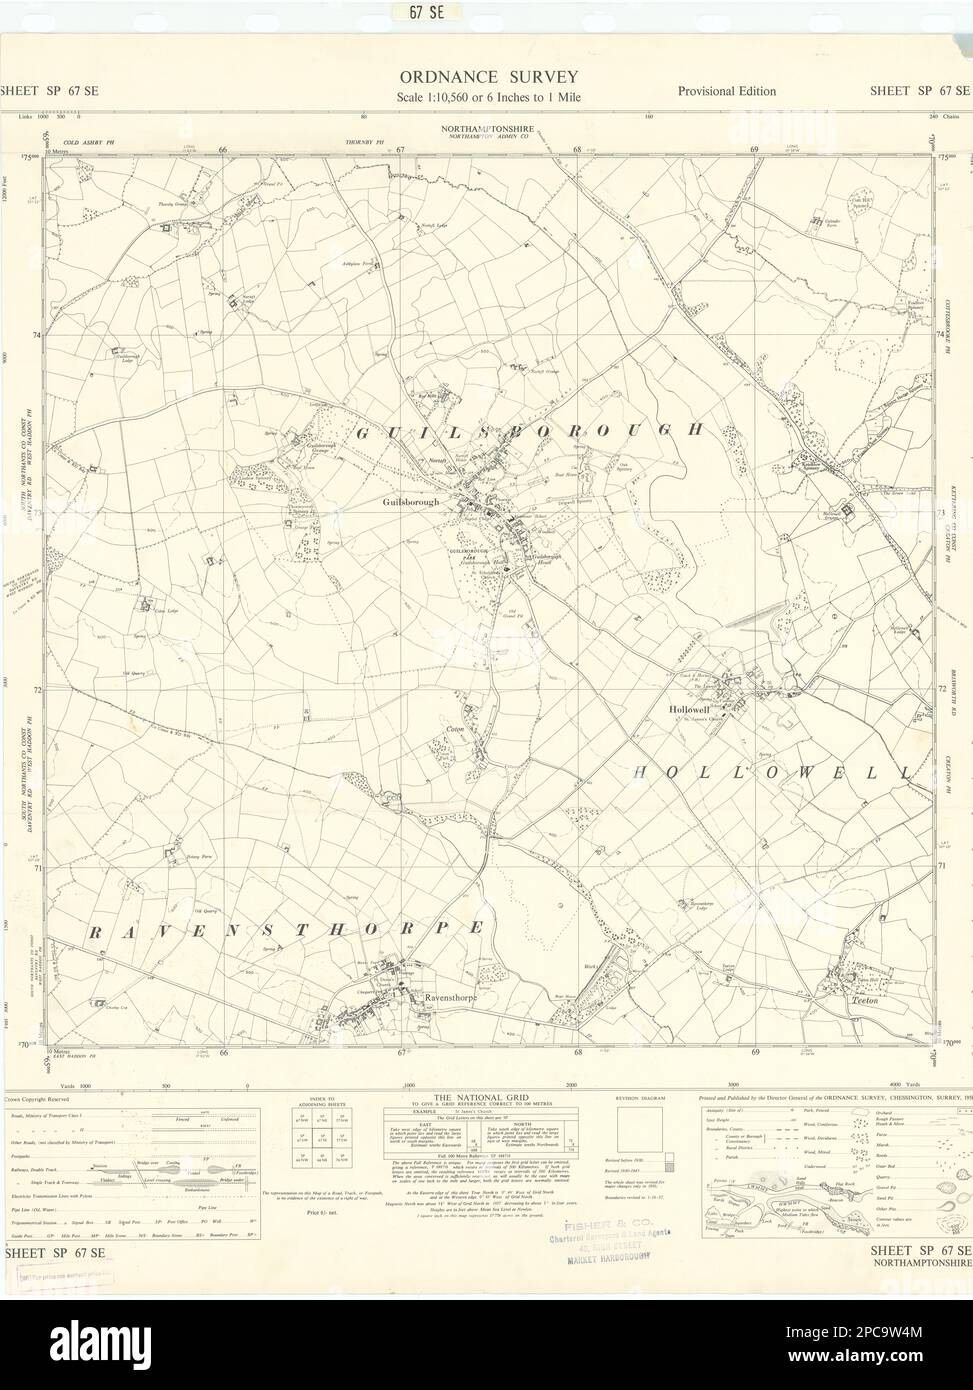 Ordnance Survey SP67SE Northants Guildsborough Ravensthorpe Hollowell 1958 mapa Foto de stock